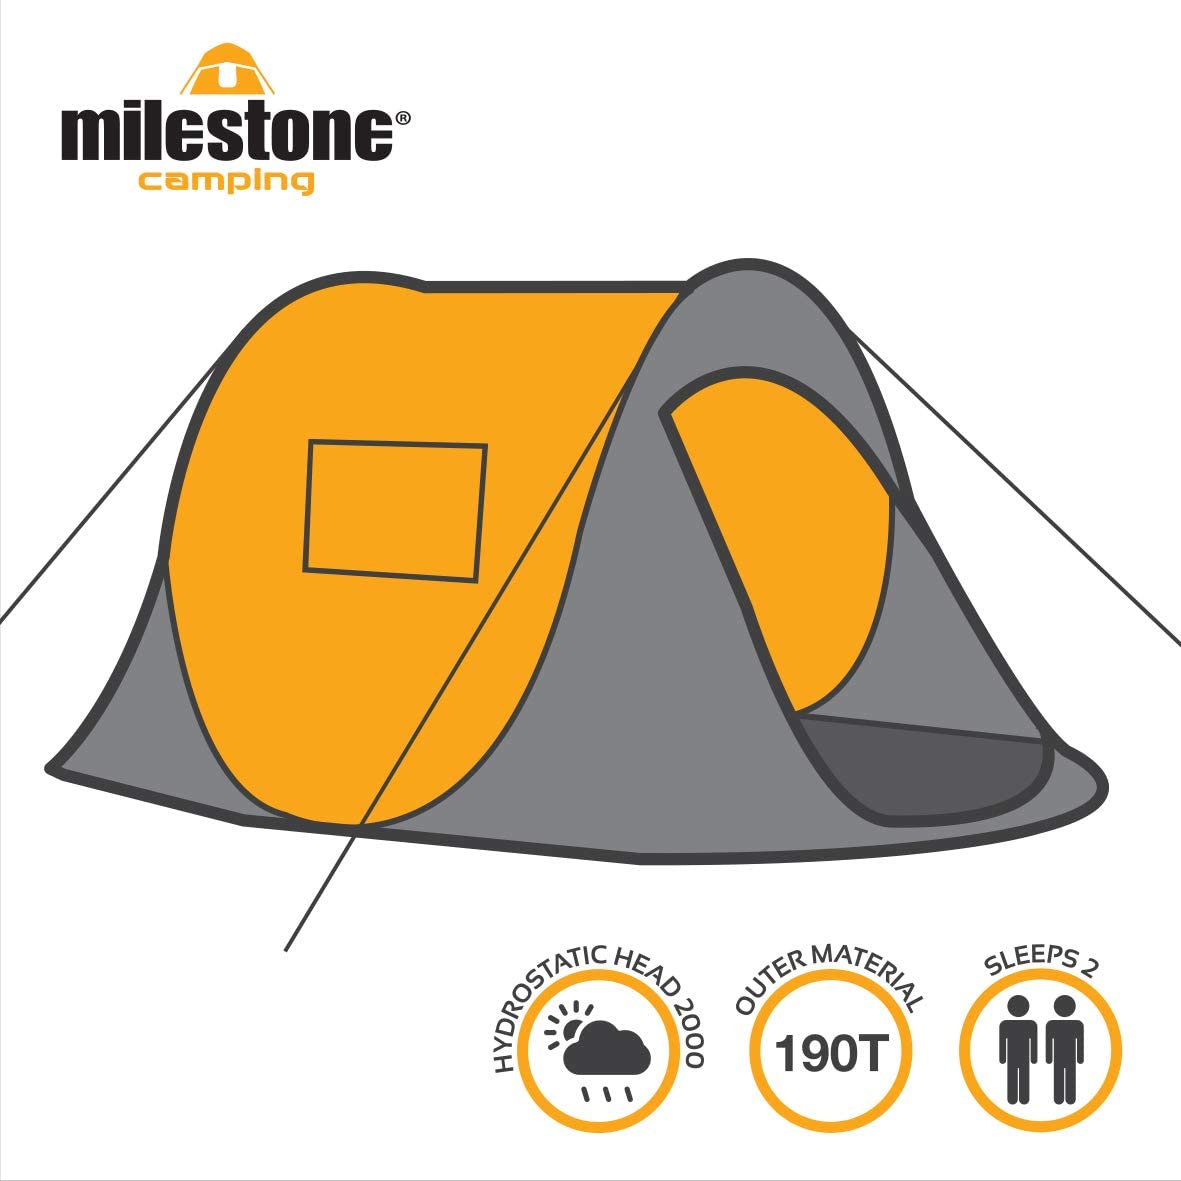 Milestone Camping 2 Man Festival Pop Up Tent Orange and Grey